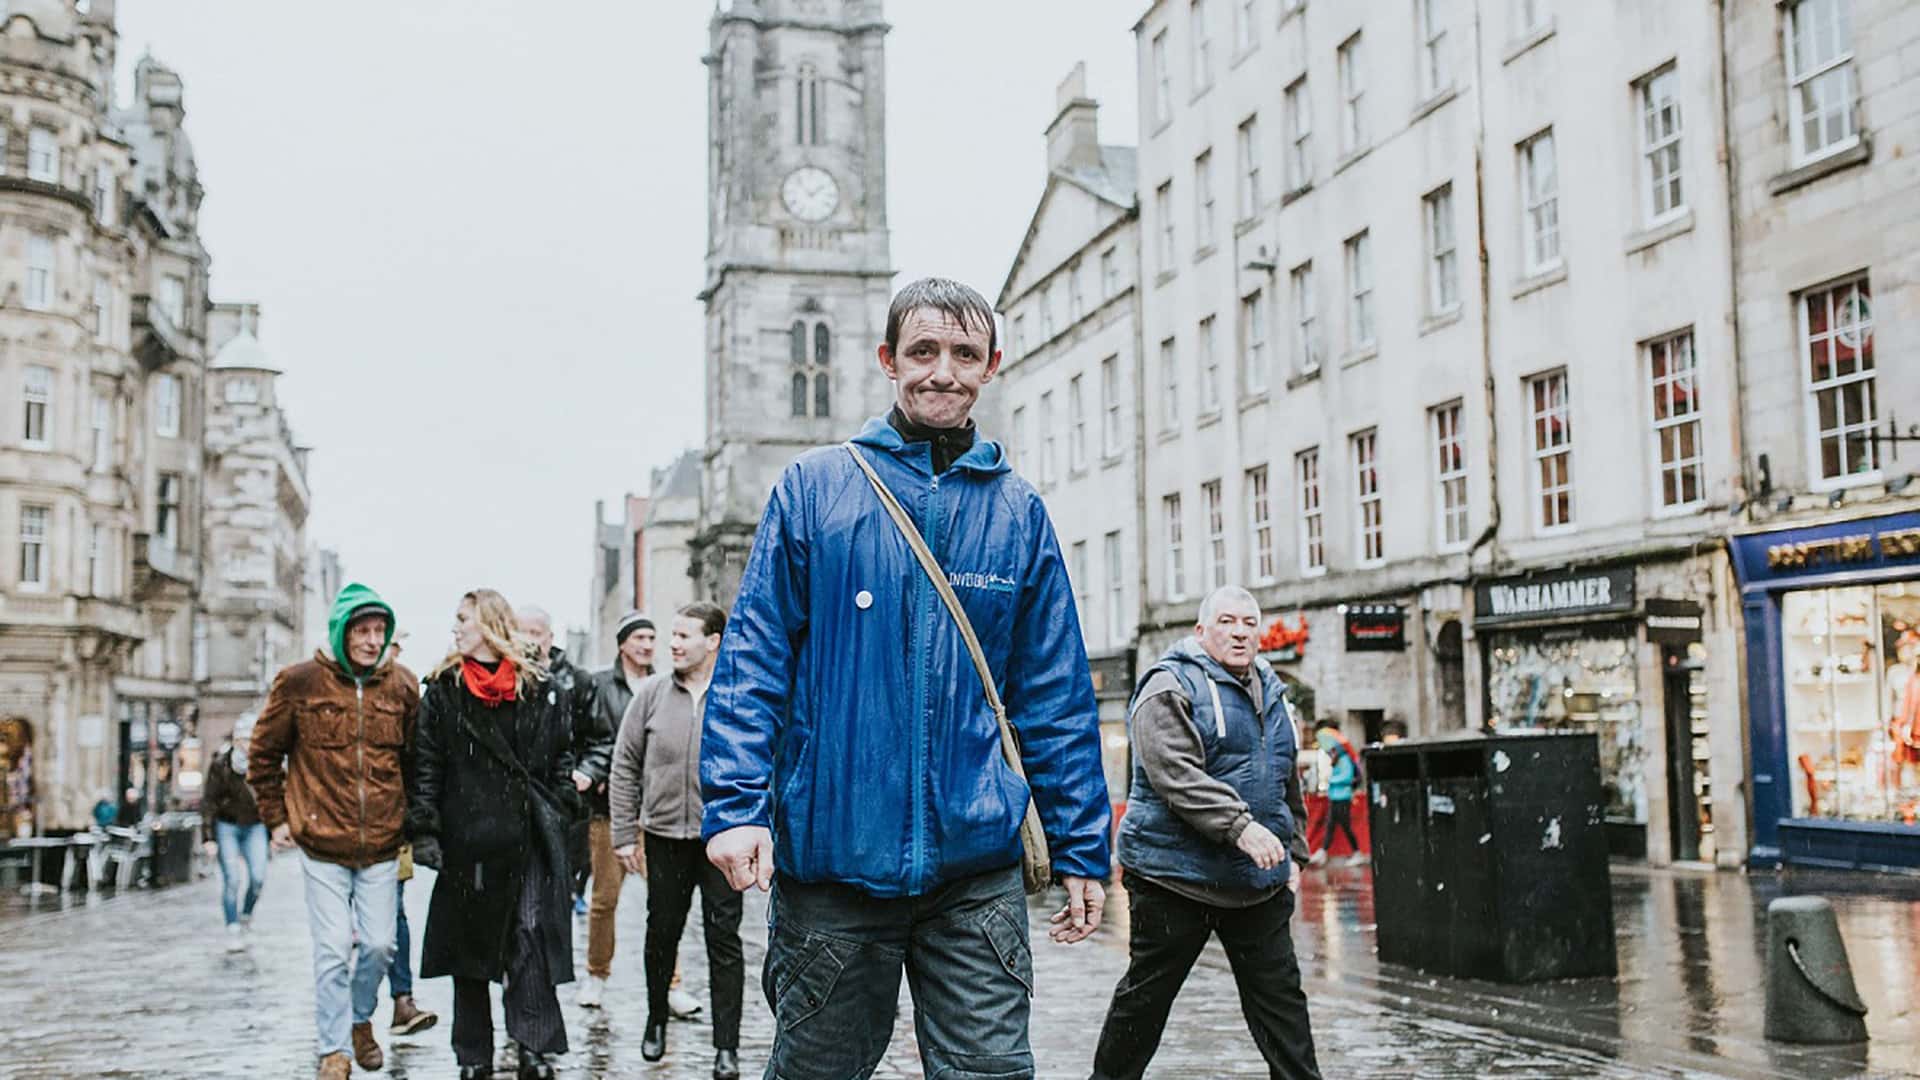 A man in a blue jacket walking down a street in edinburgh.